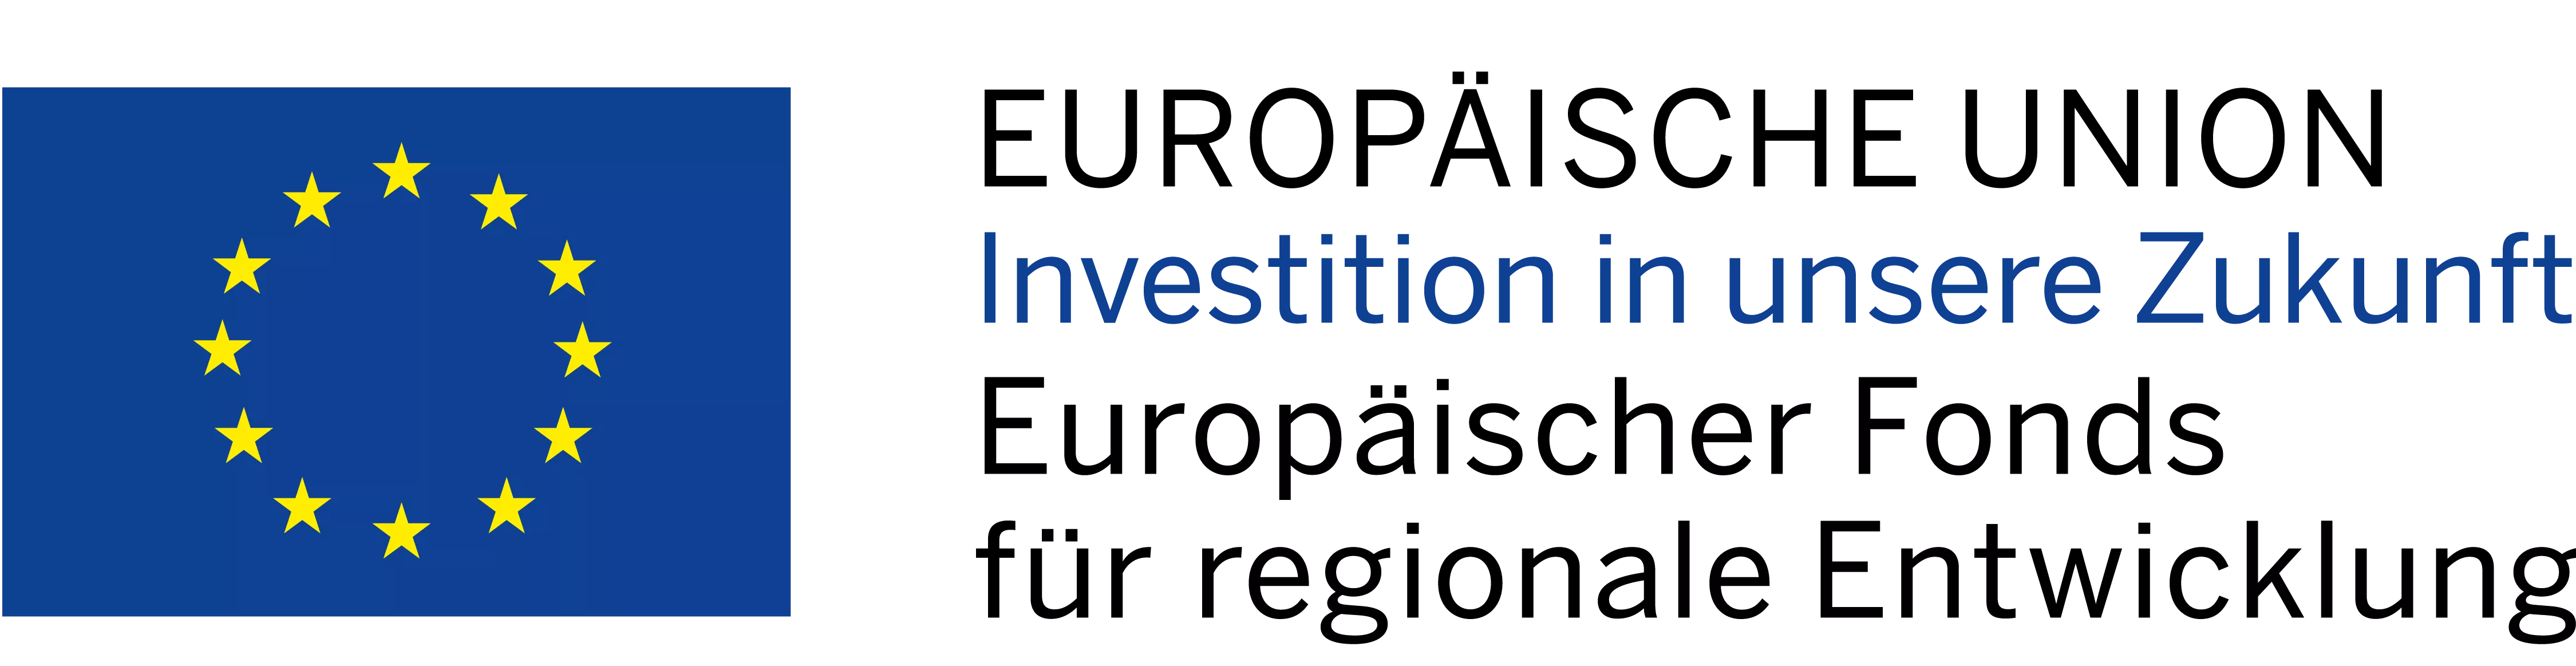 spacecrumb Web Partner Logos EU Investition Zukunft